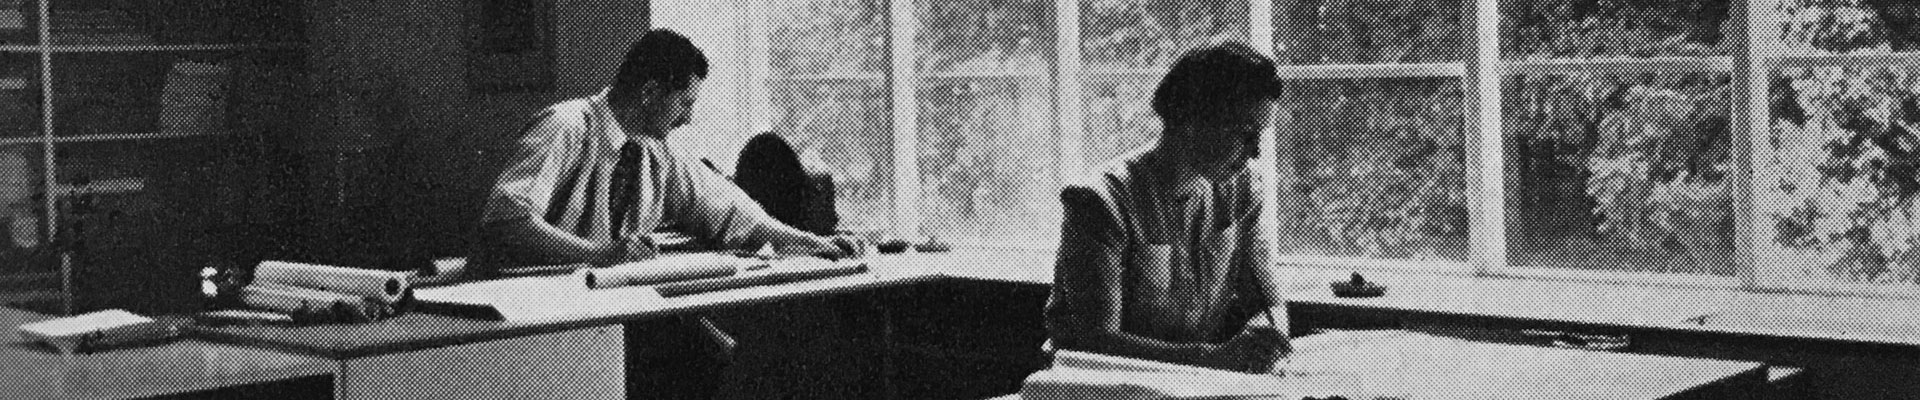 Victorine and Samuel Homsey working at their desks circa 1940's